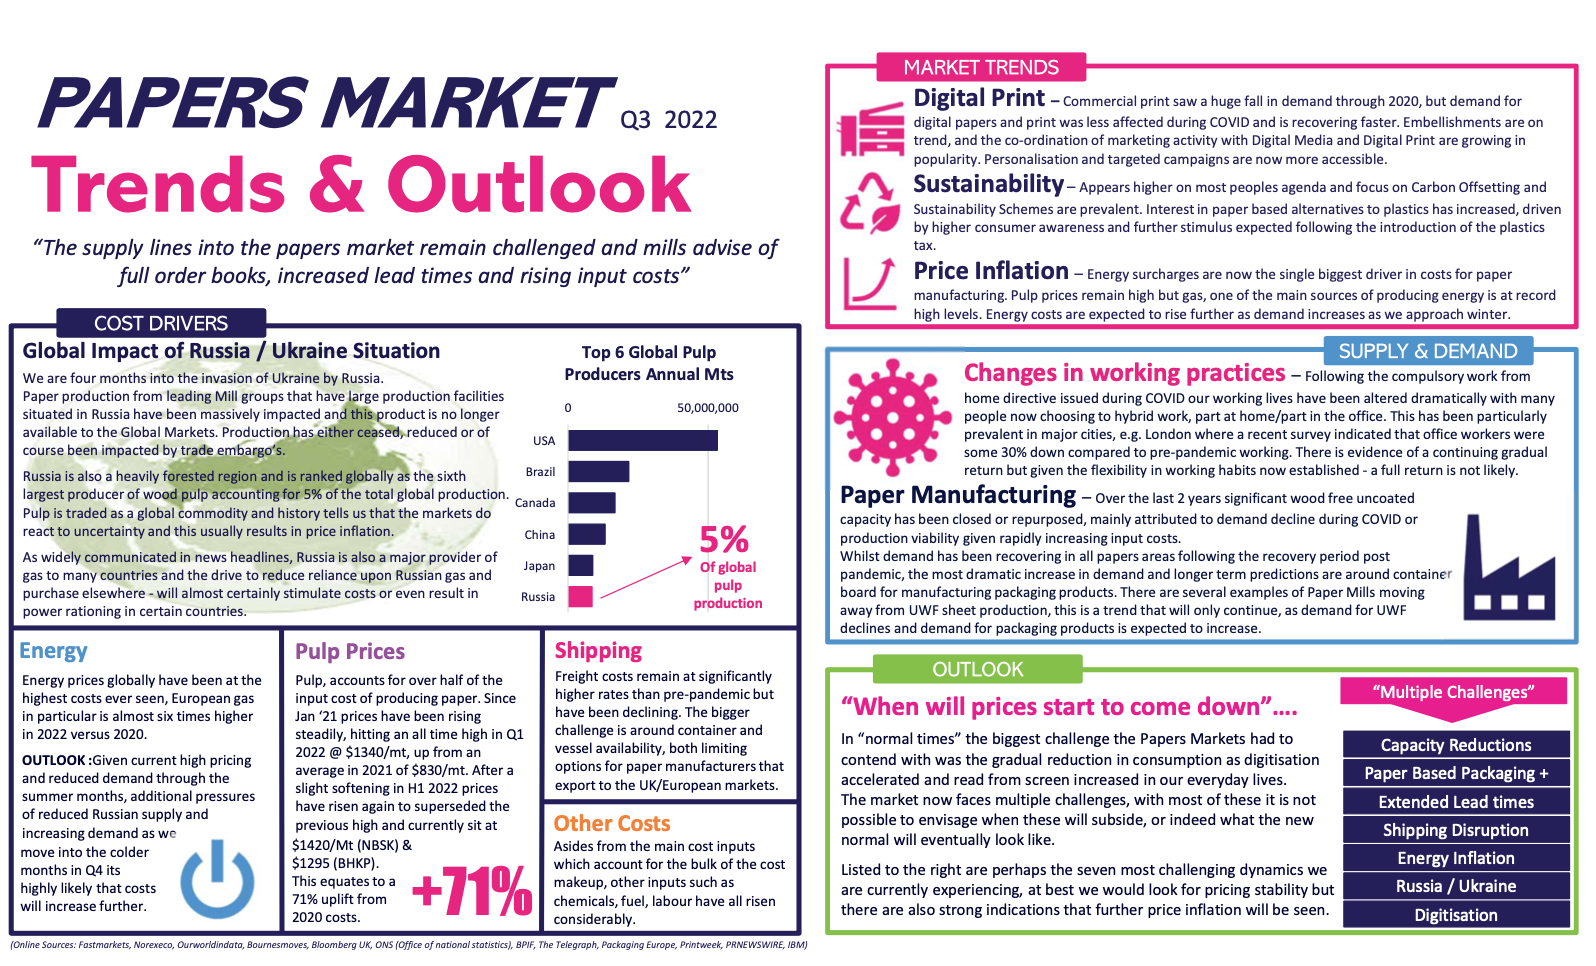 Paper Market Trends infographic